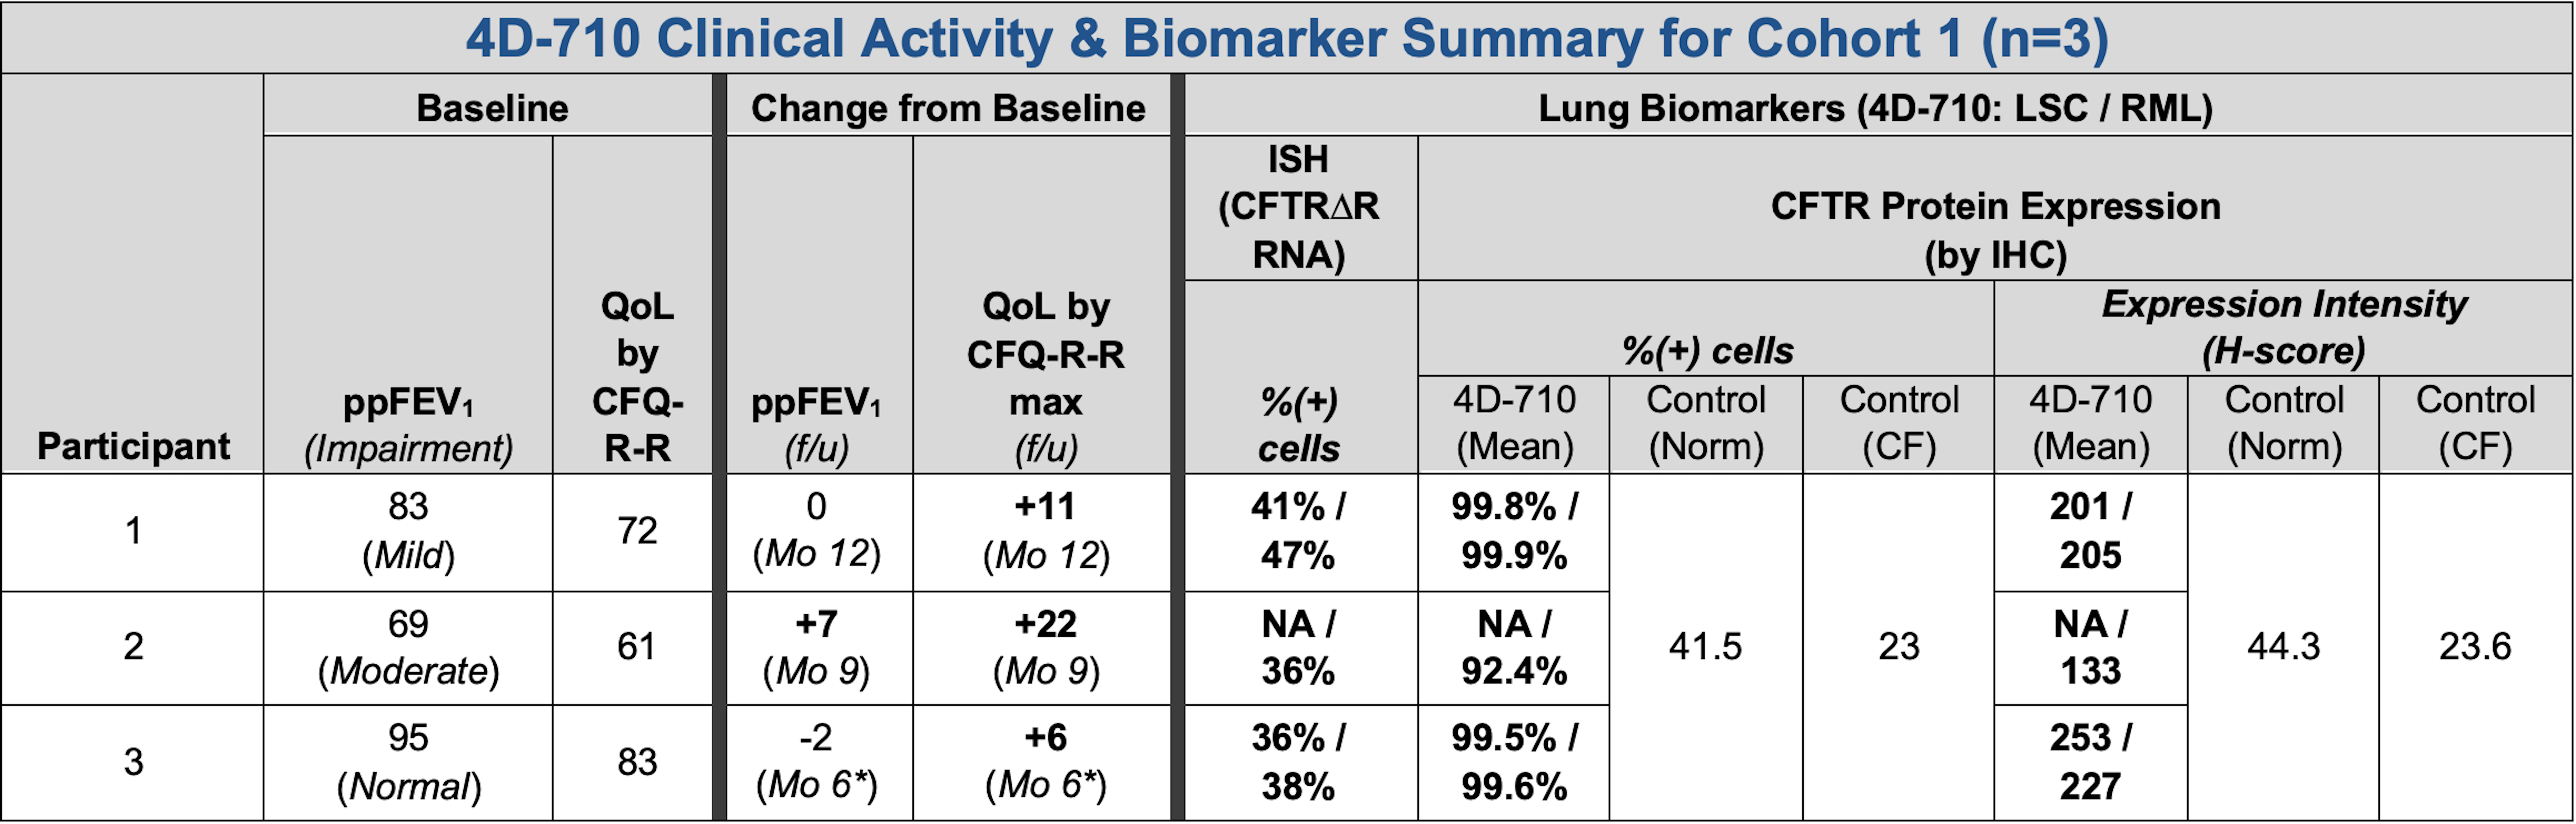 4D-710 Clinical Activity & Biomarker Summary for Cohort 1 (n=3)